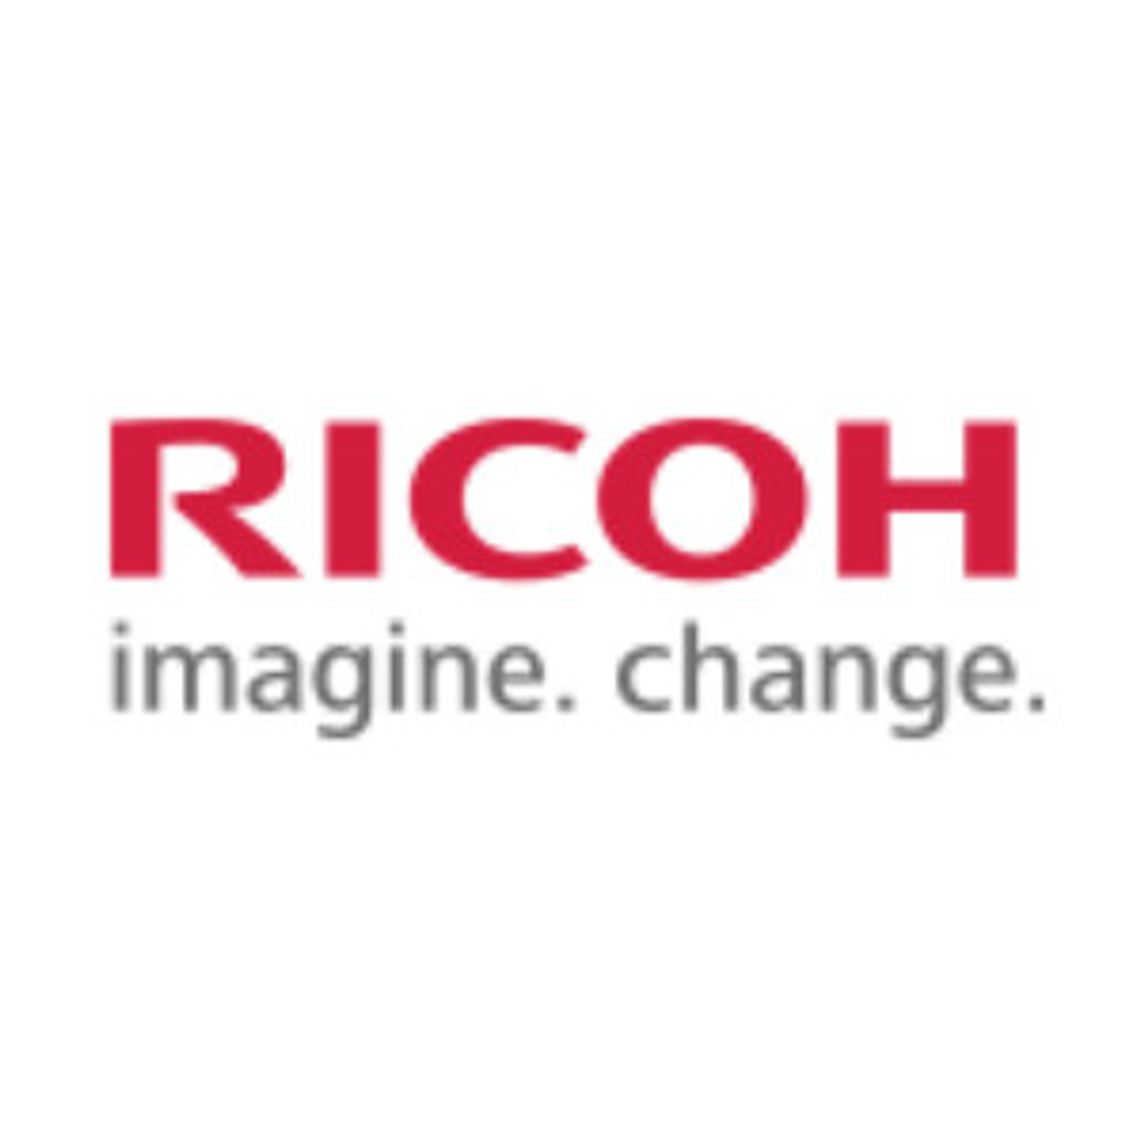 Usługi biznesowe - Ricoh